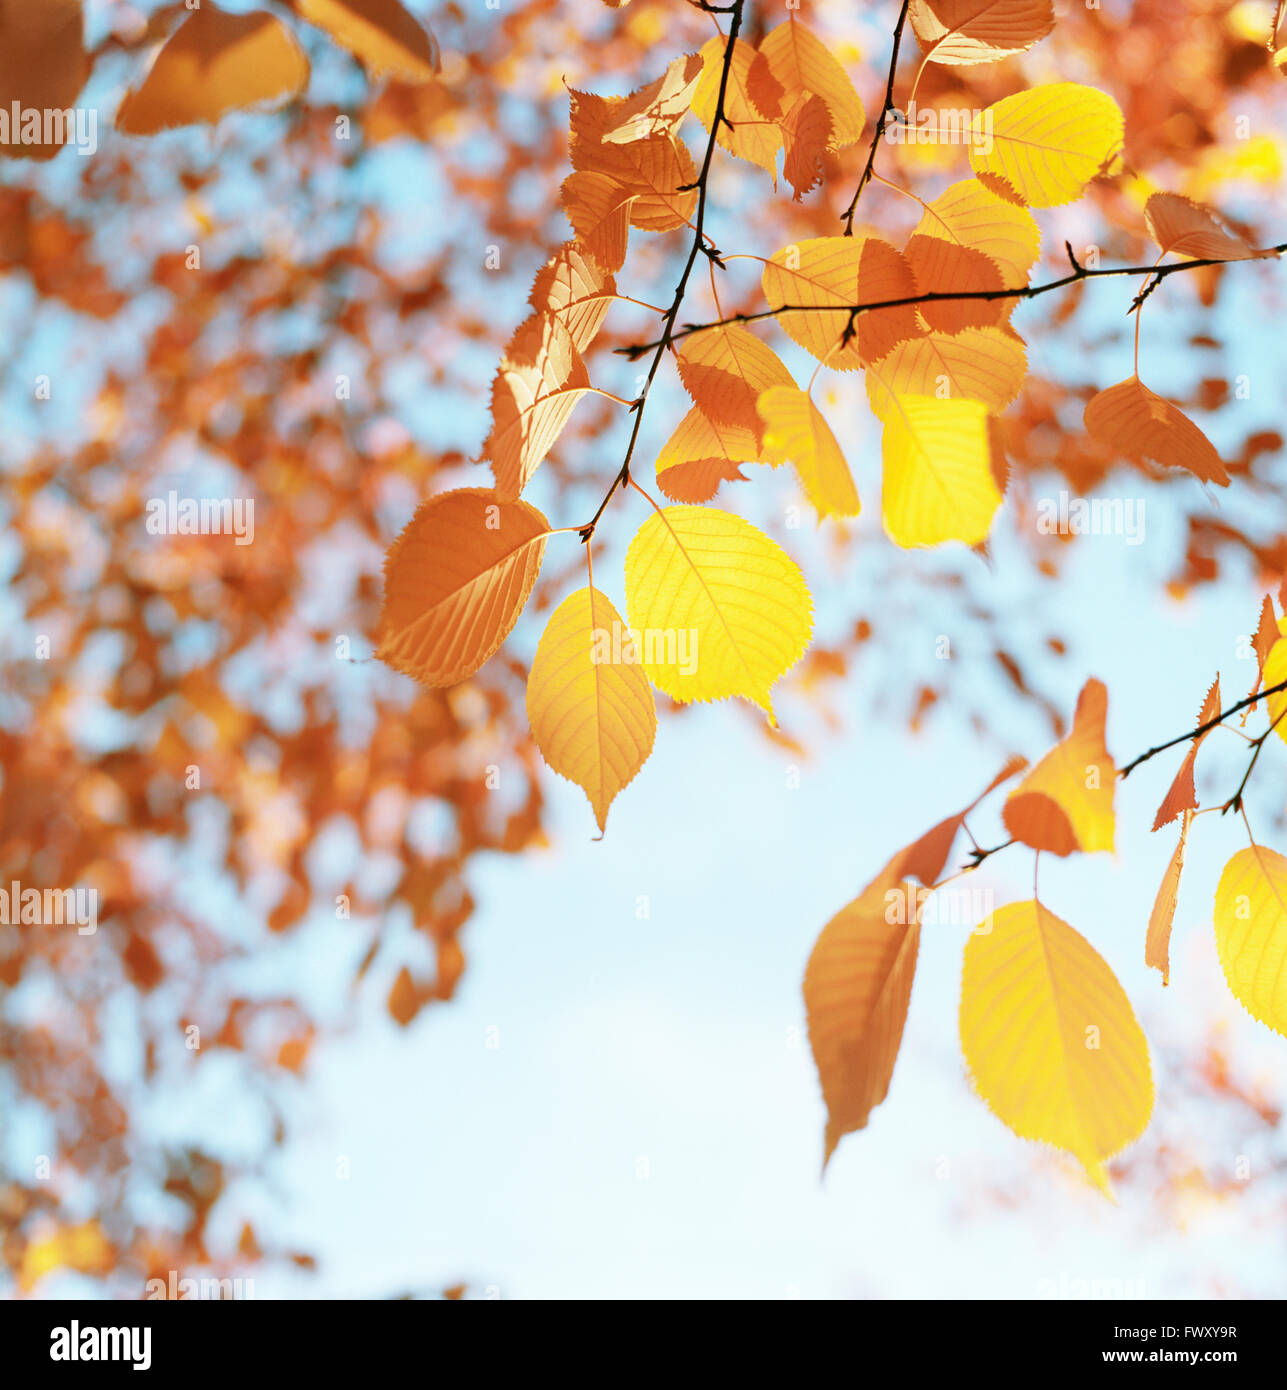 Finland, Helsinki, Roihuvuori, Cherry tree branches with autumn leaves Stock Photo